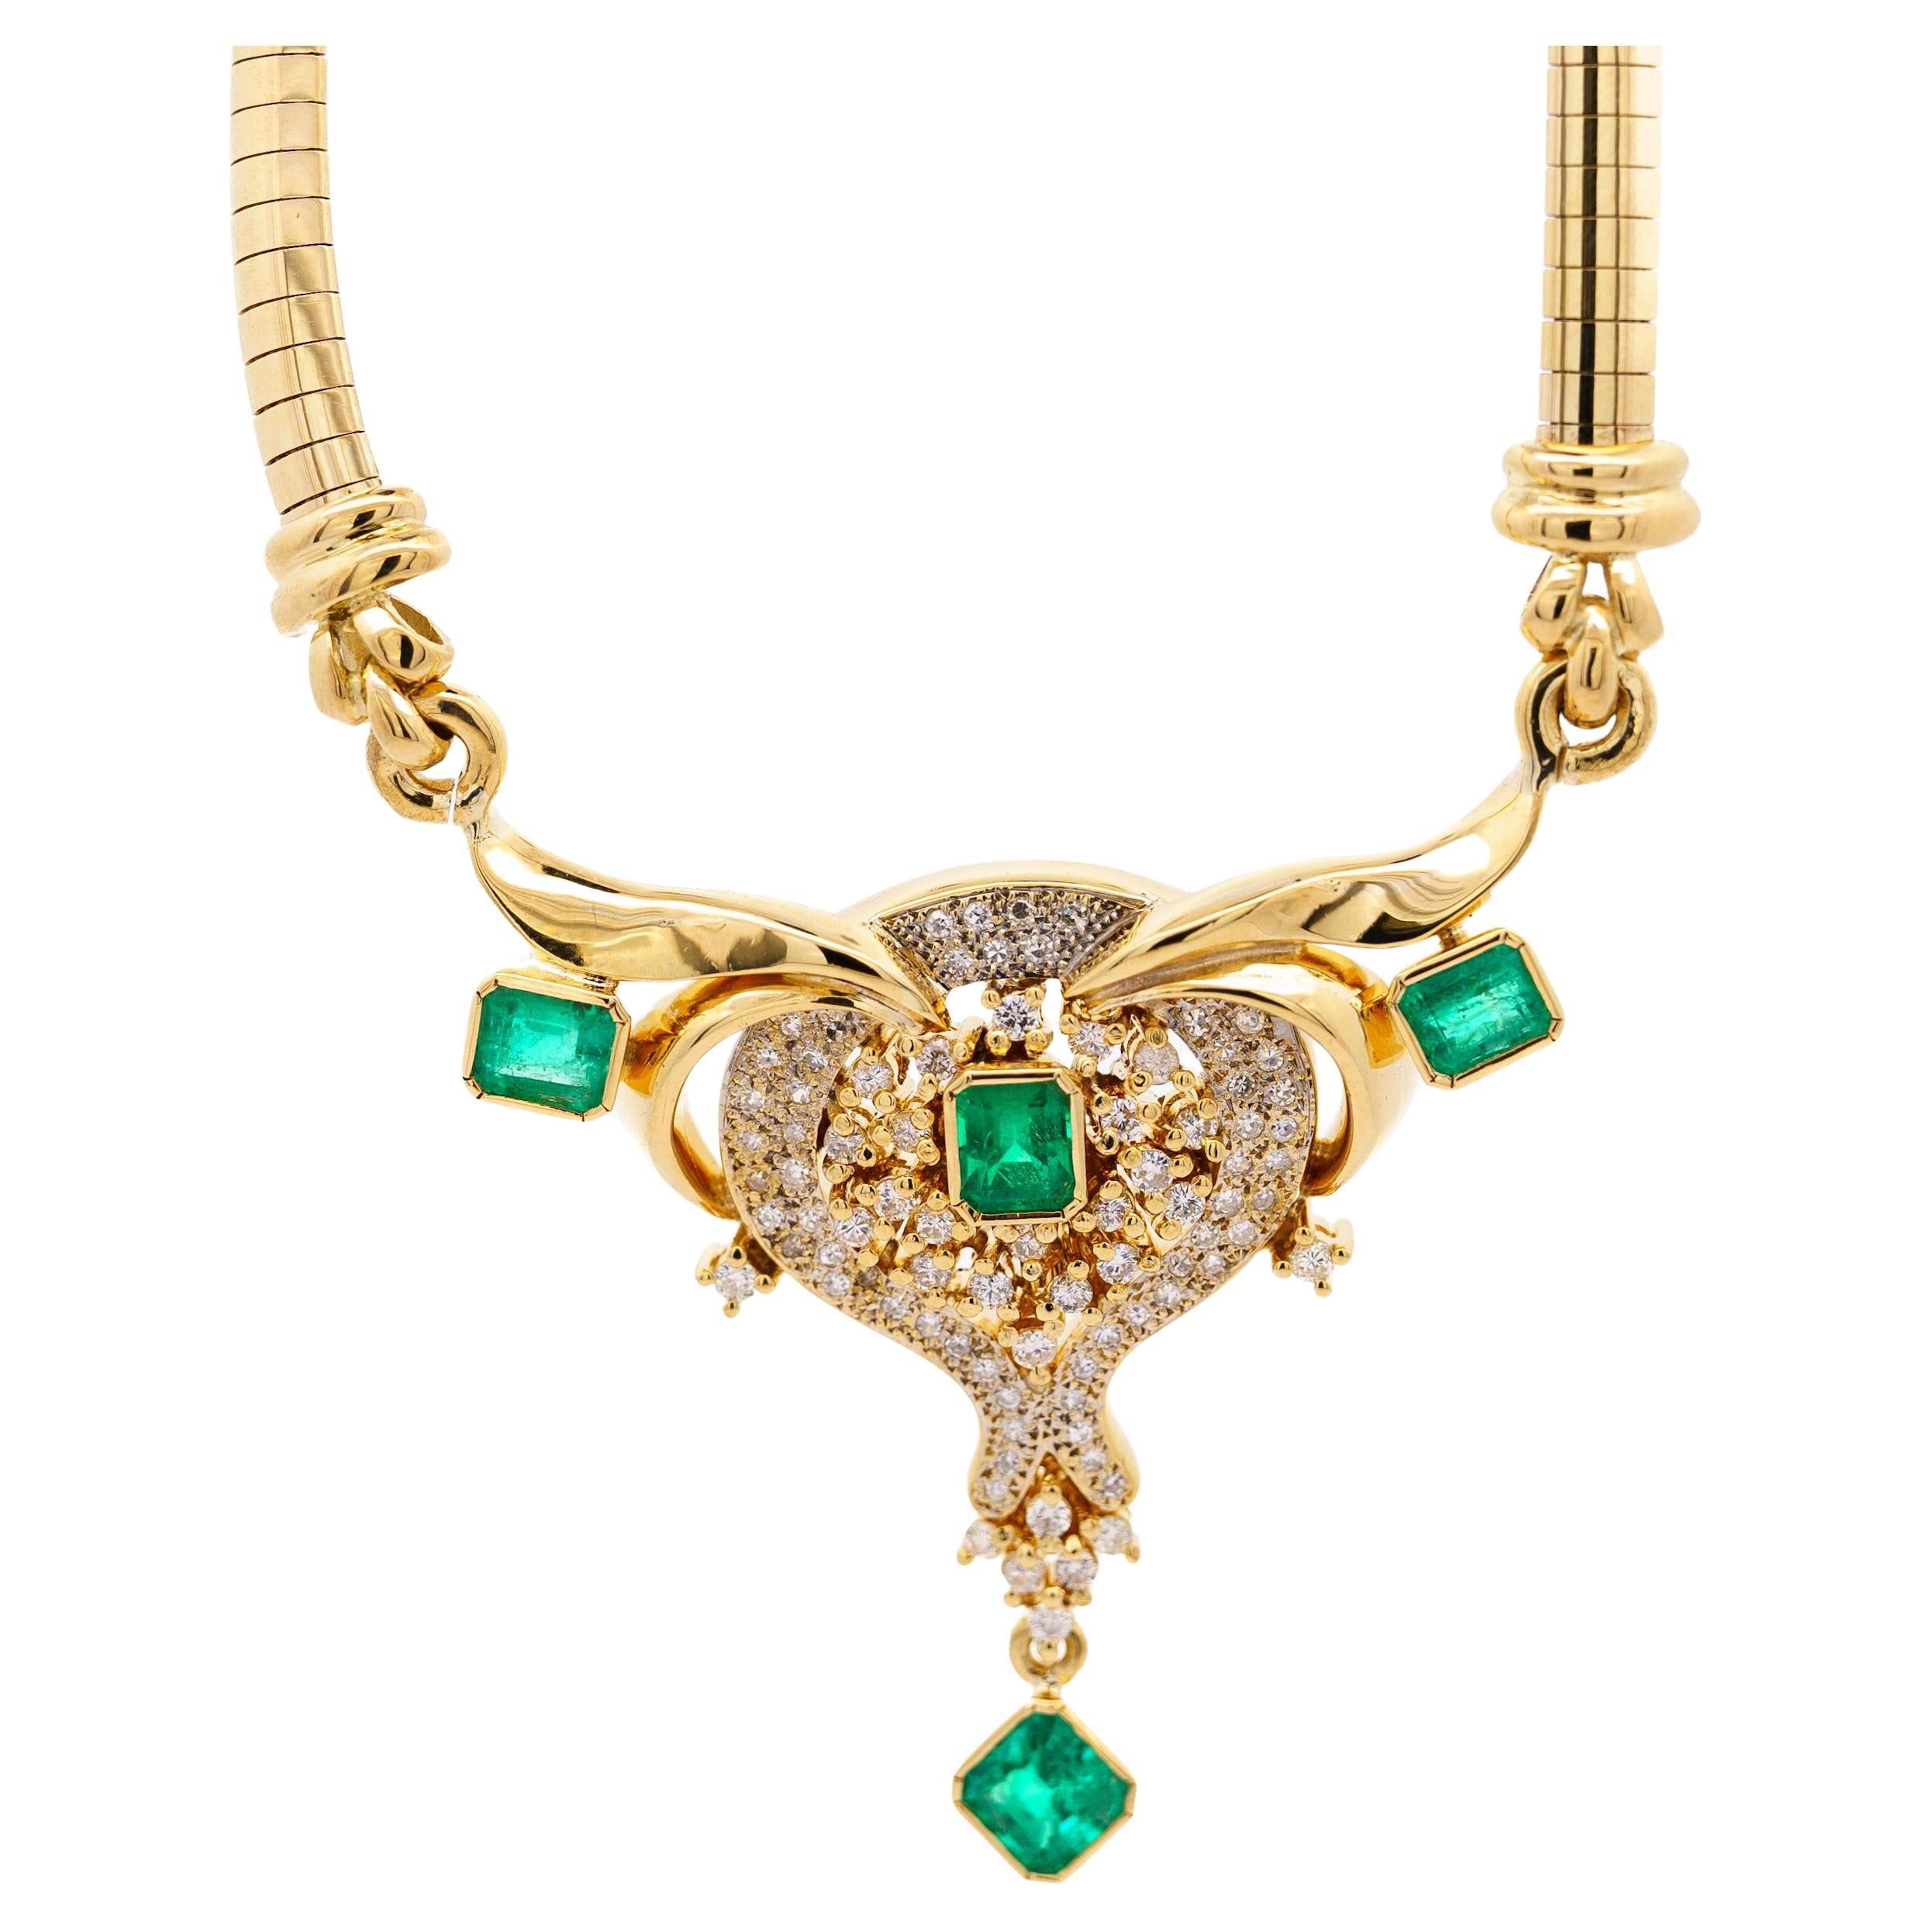 Collier Vintage 5 Carat Emerald & Diamond en or jaune 14K